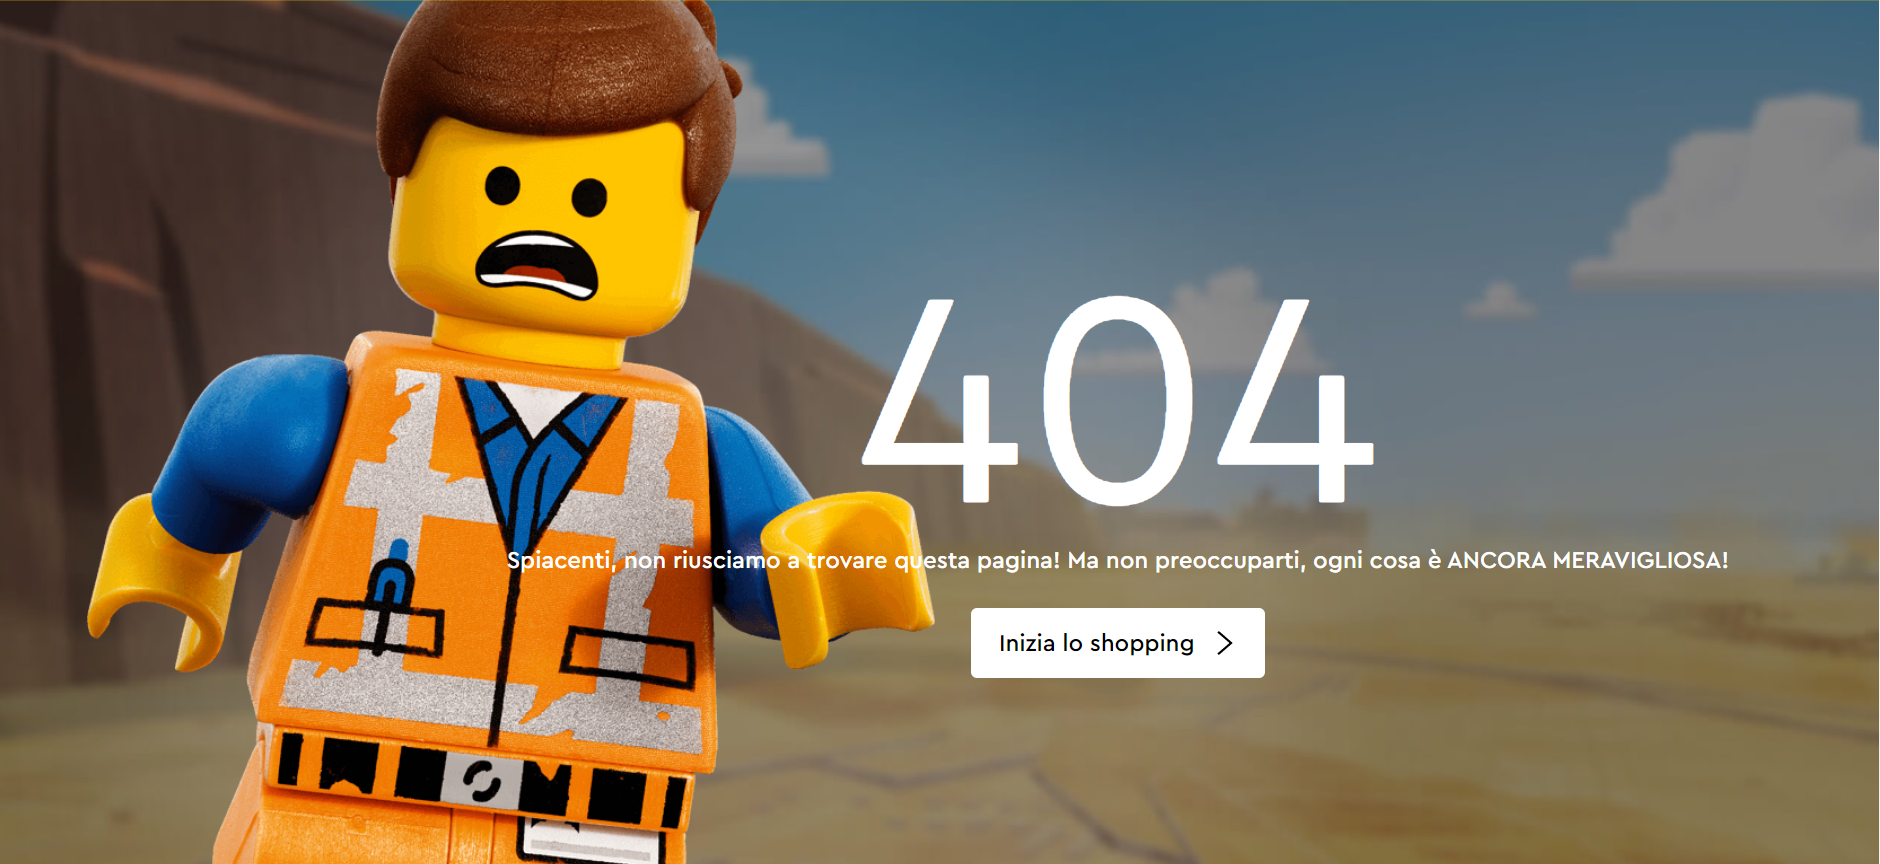 Error 404 Lego